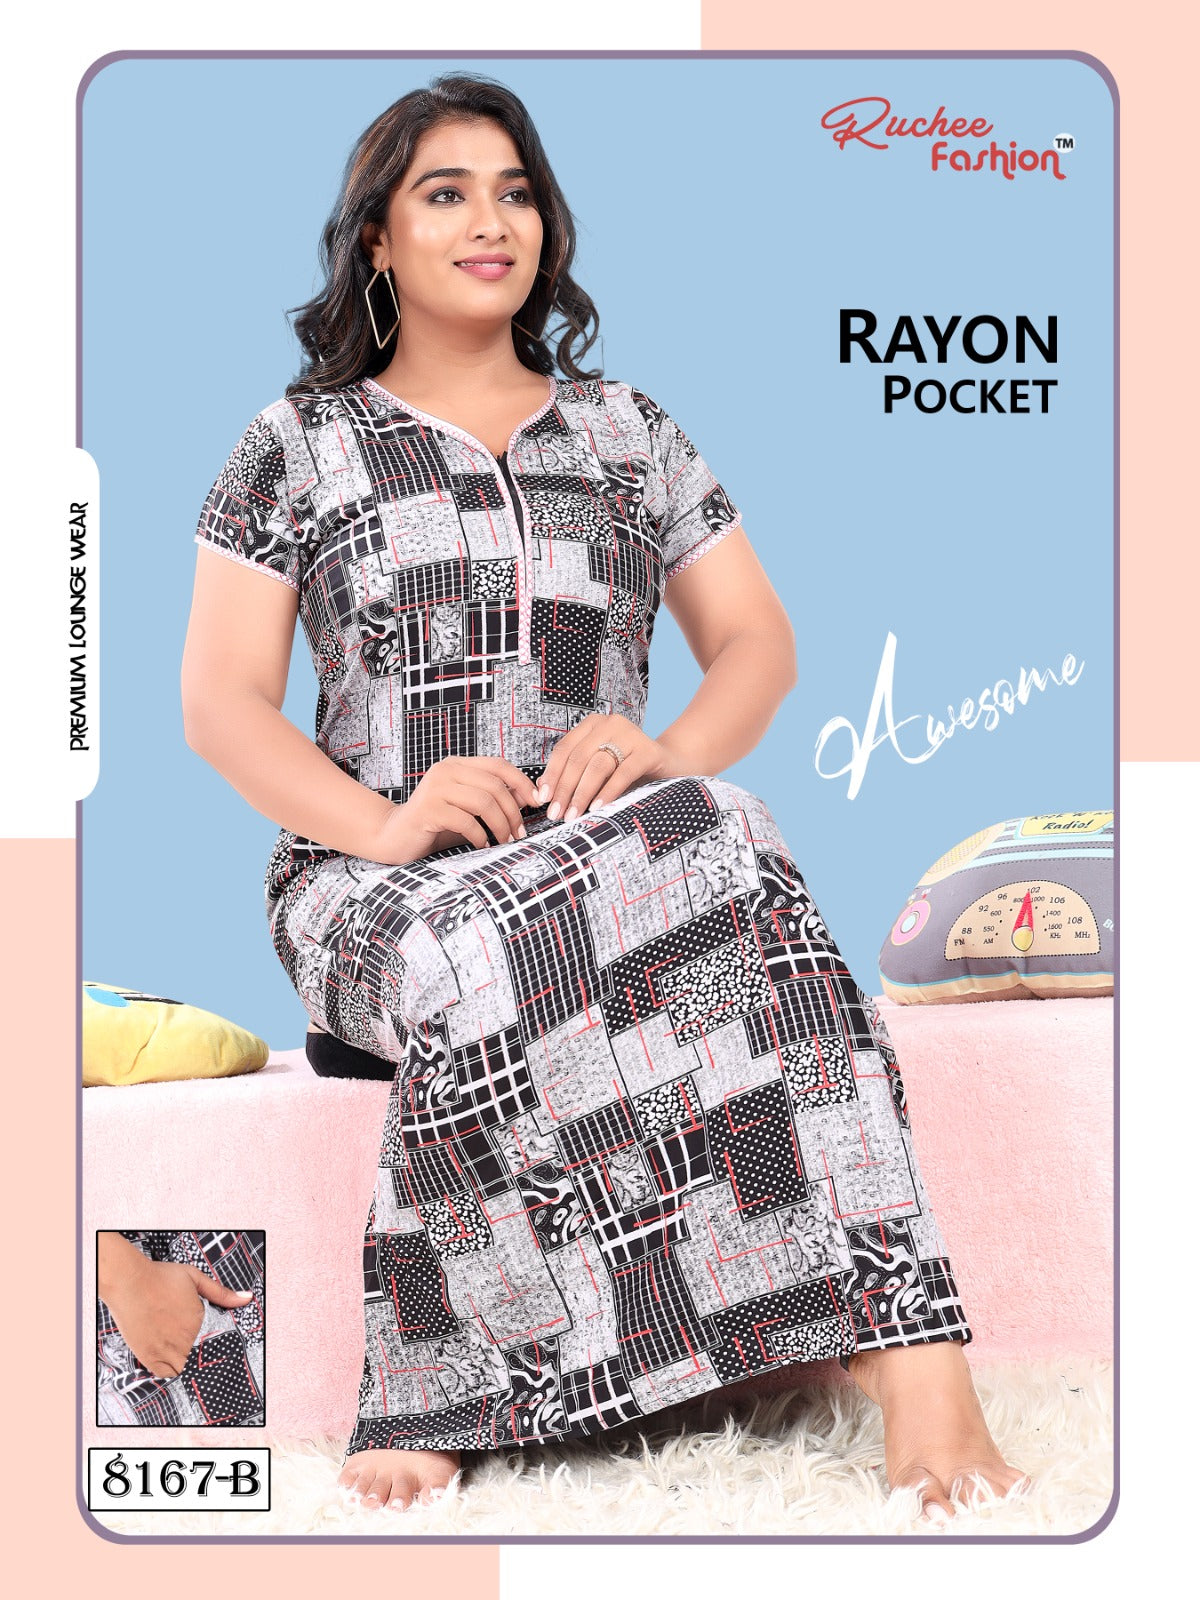 Rayon Pocket Ruchee Fashion Night Gowns